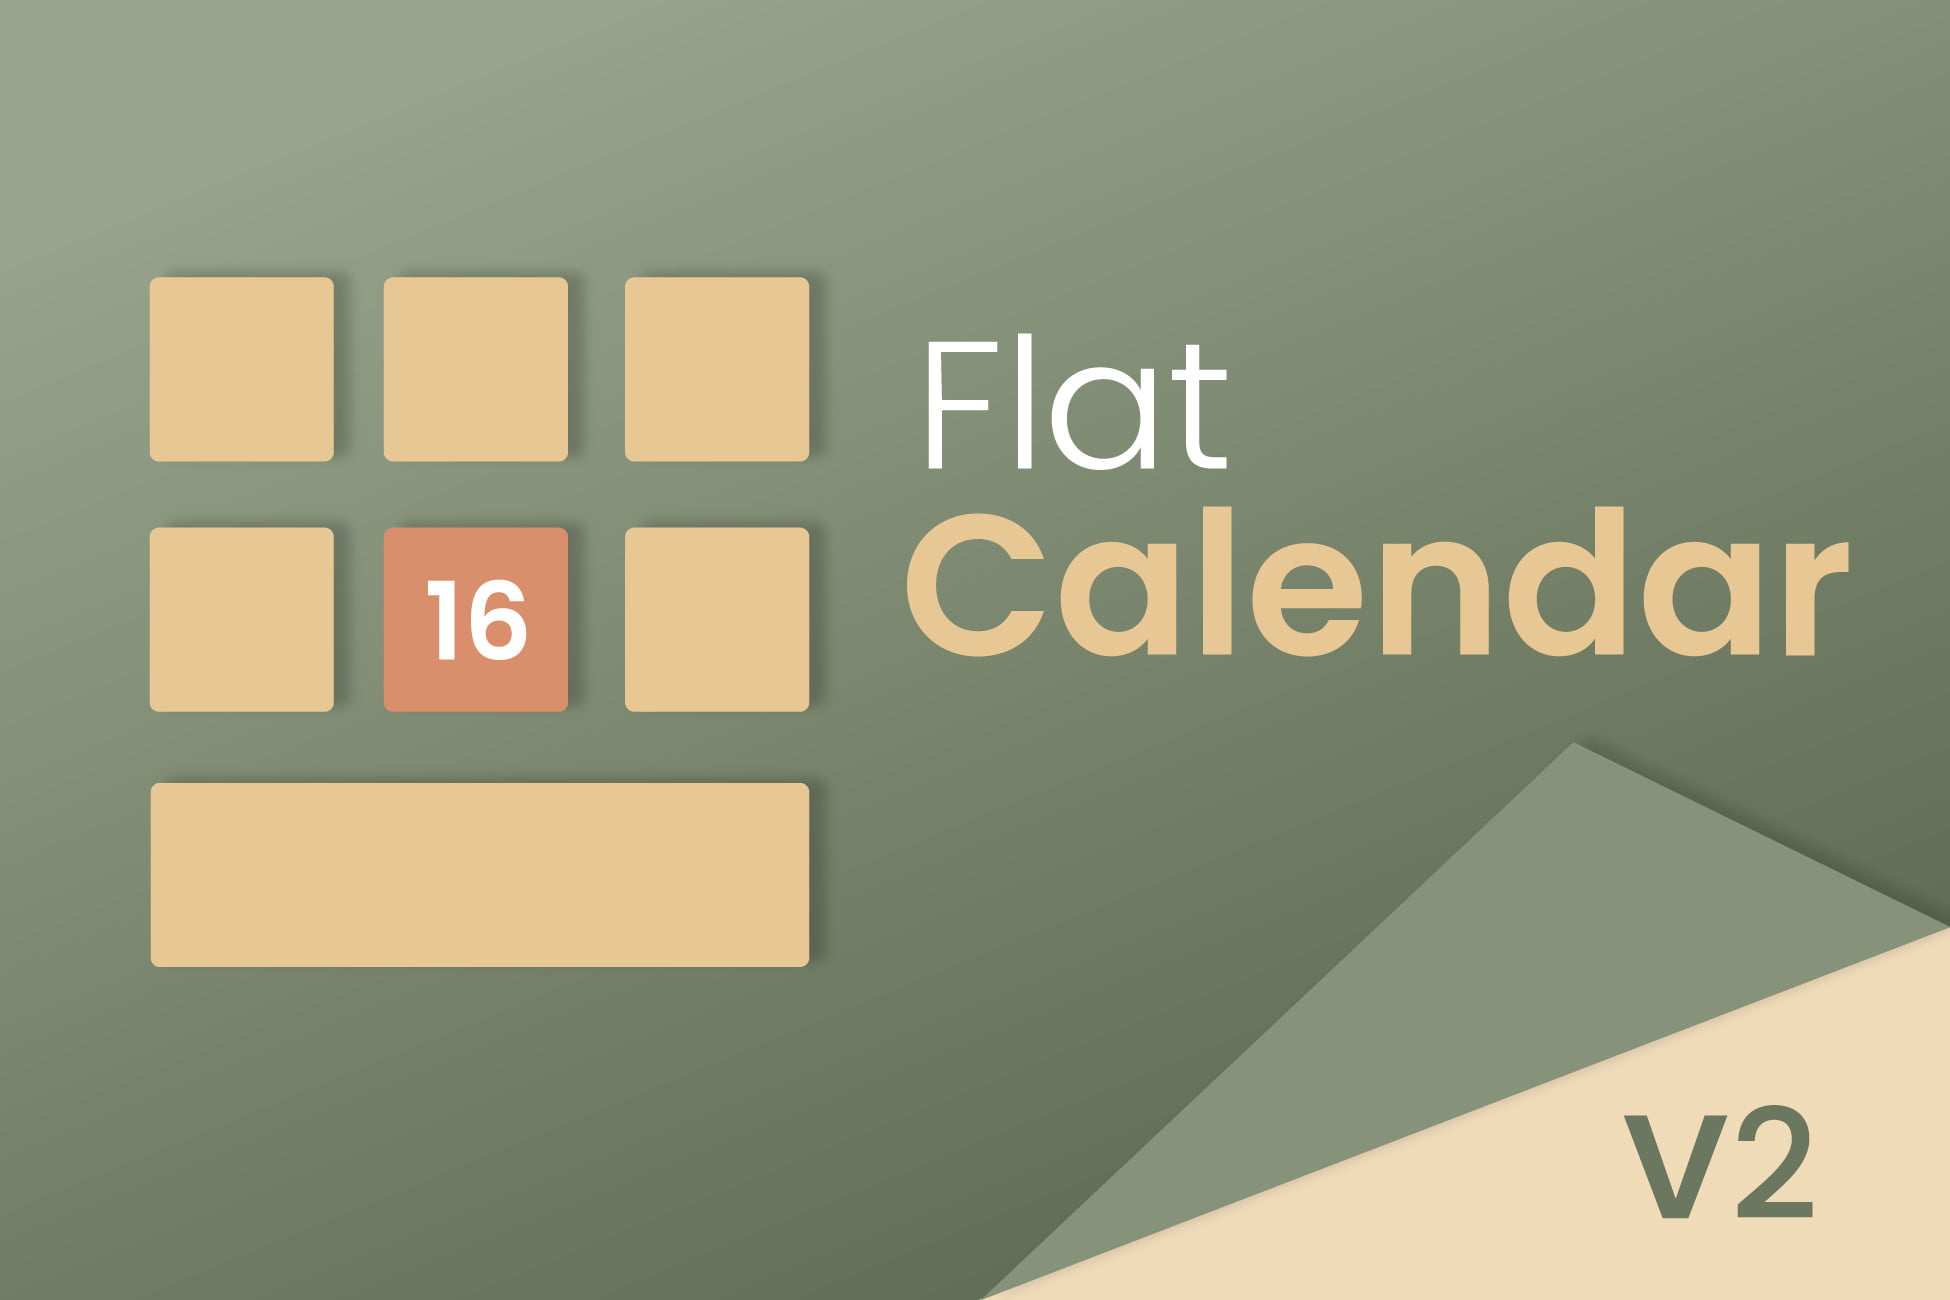 Download Unity Assets FREE Flat Calendar V2 Freedom Club Developers